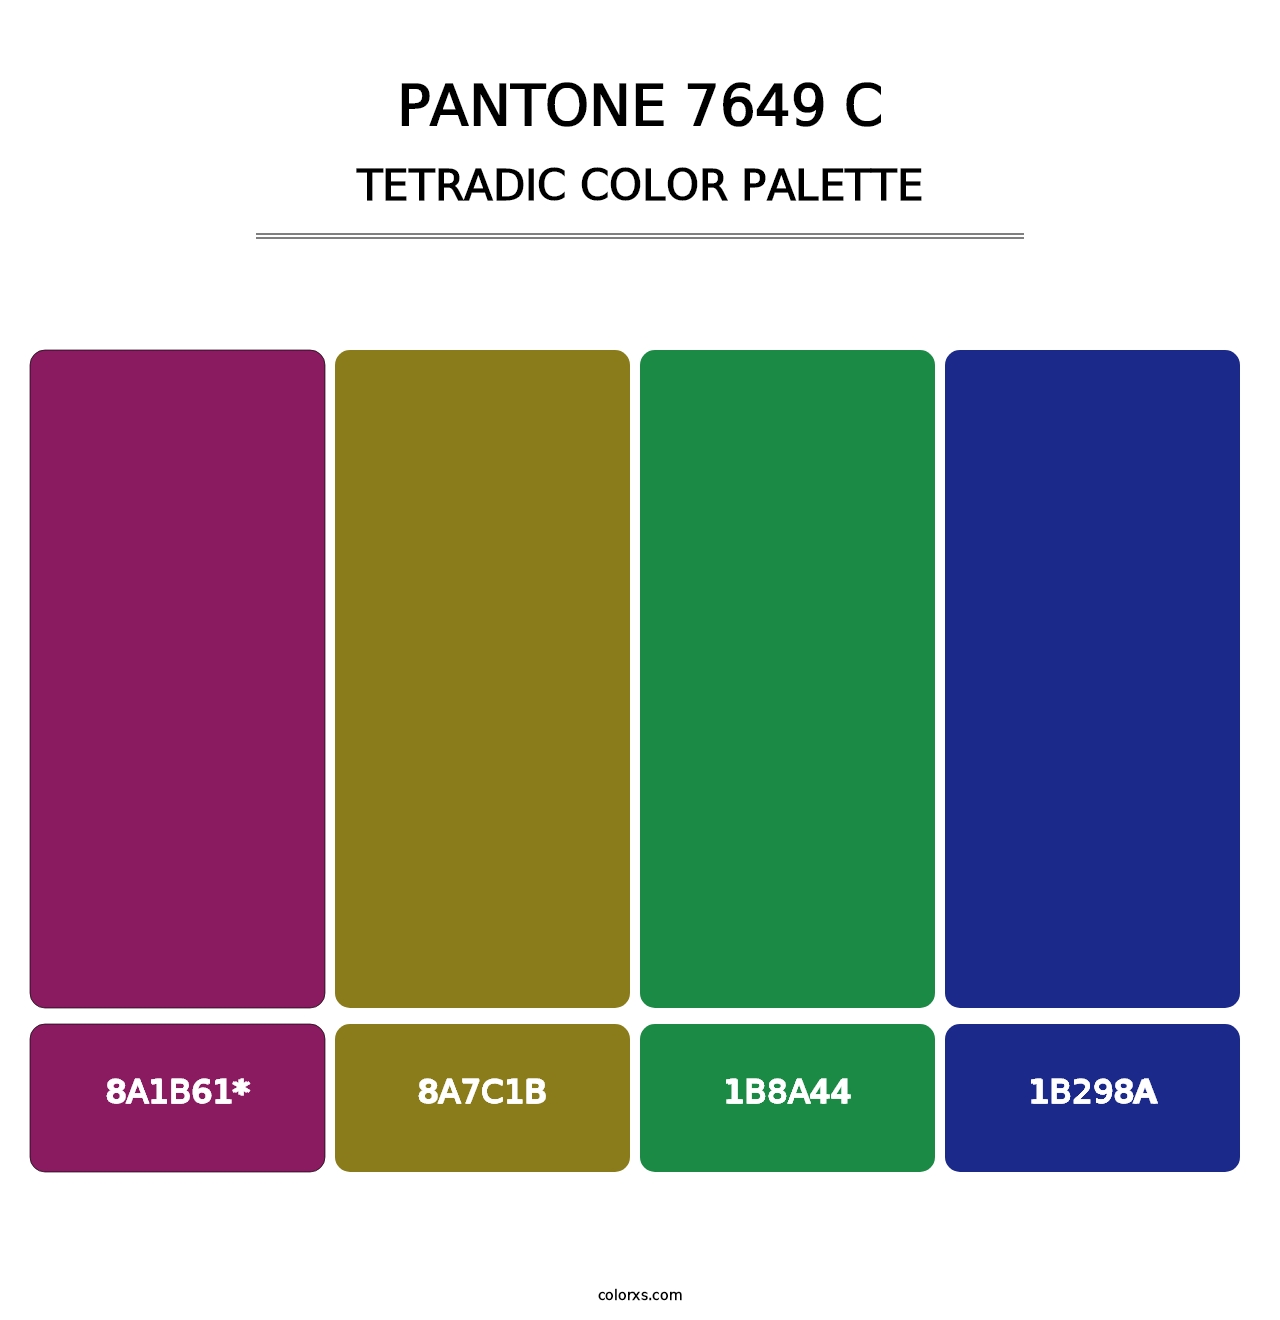 PANTONE 7649 C - Tetradic Color Palette